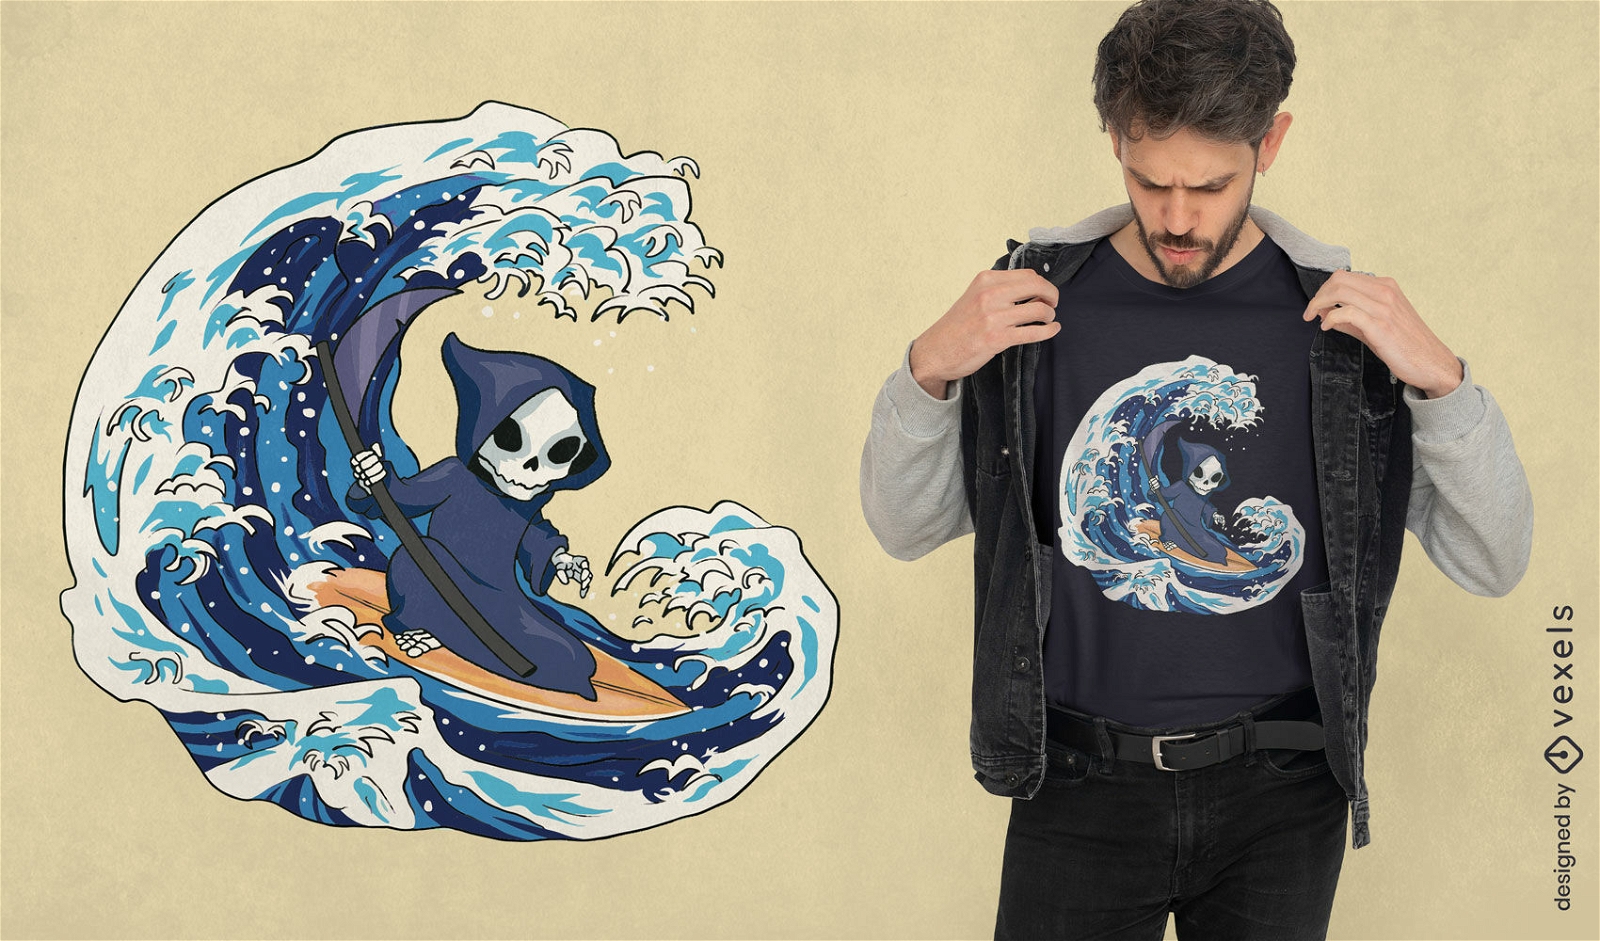 Grim reaper surfing t-shirt design